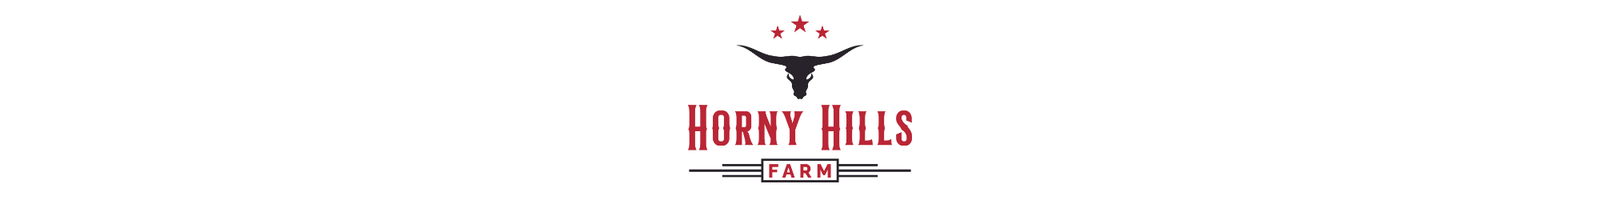 Horny Hills Farm Apparel